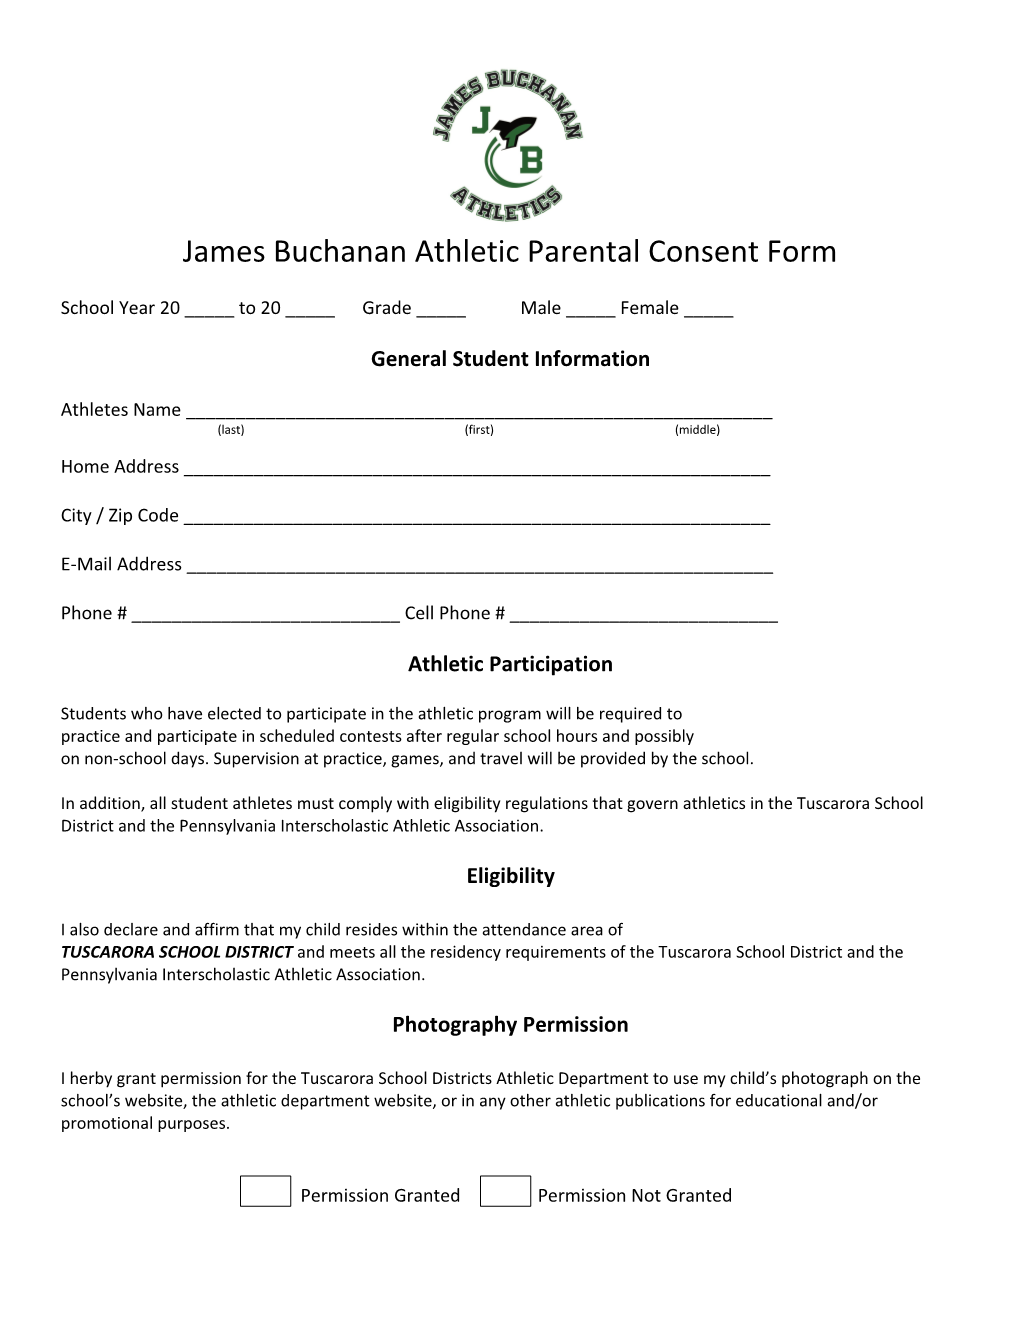 James Buchanan Athletic Parental Consent Form